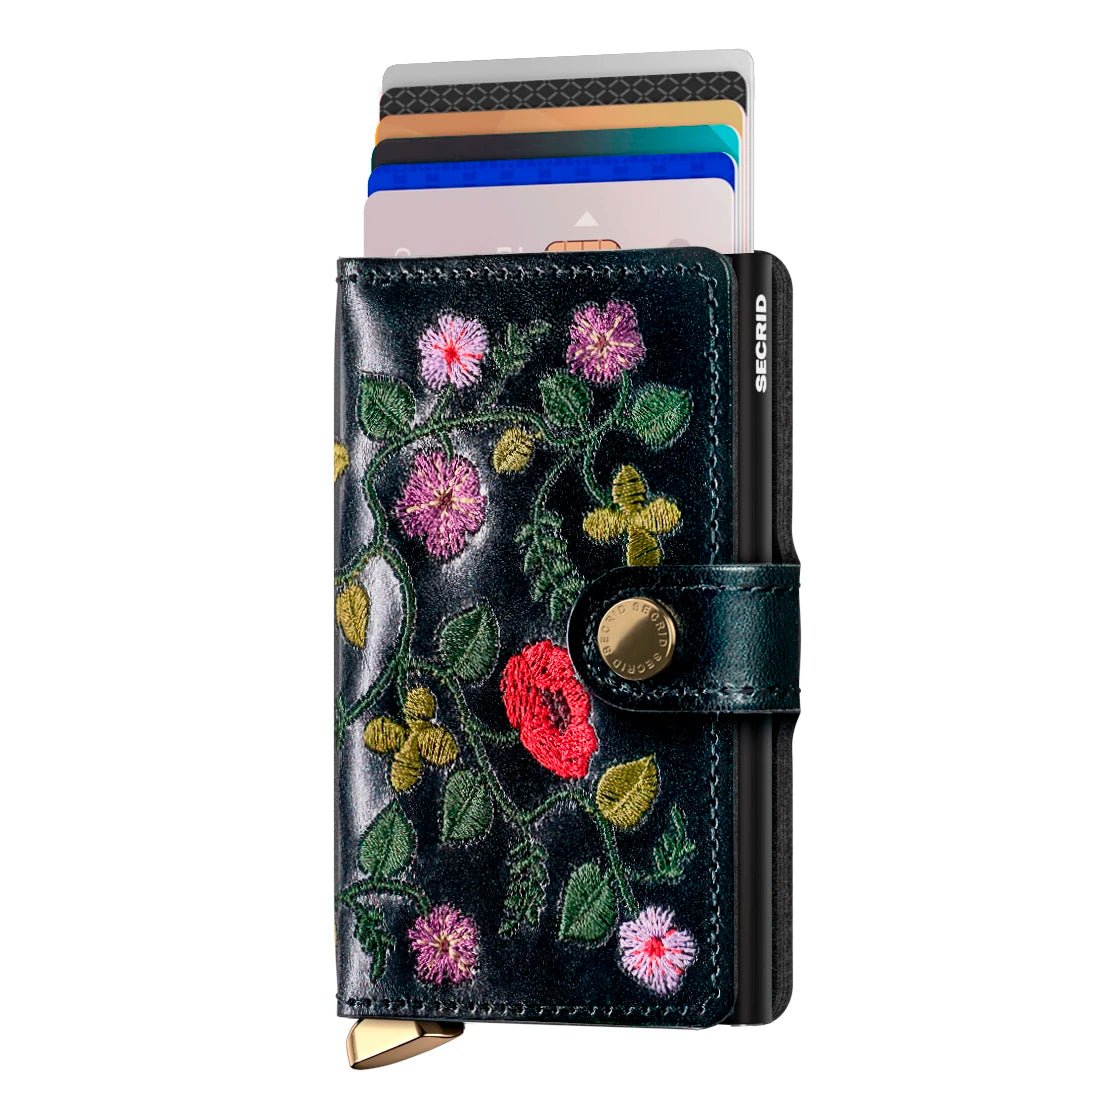 Secrid Premium Kollektion Miniwallet Stitch Floral 10 cm - Black Secrid - koffer - direkt.de